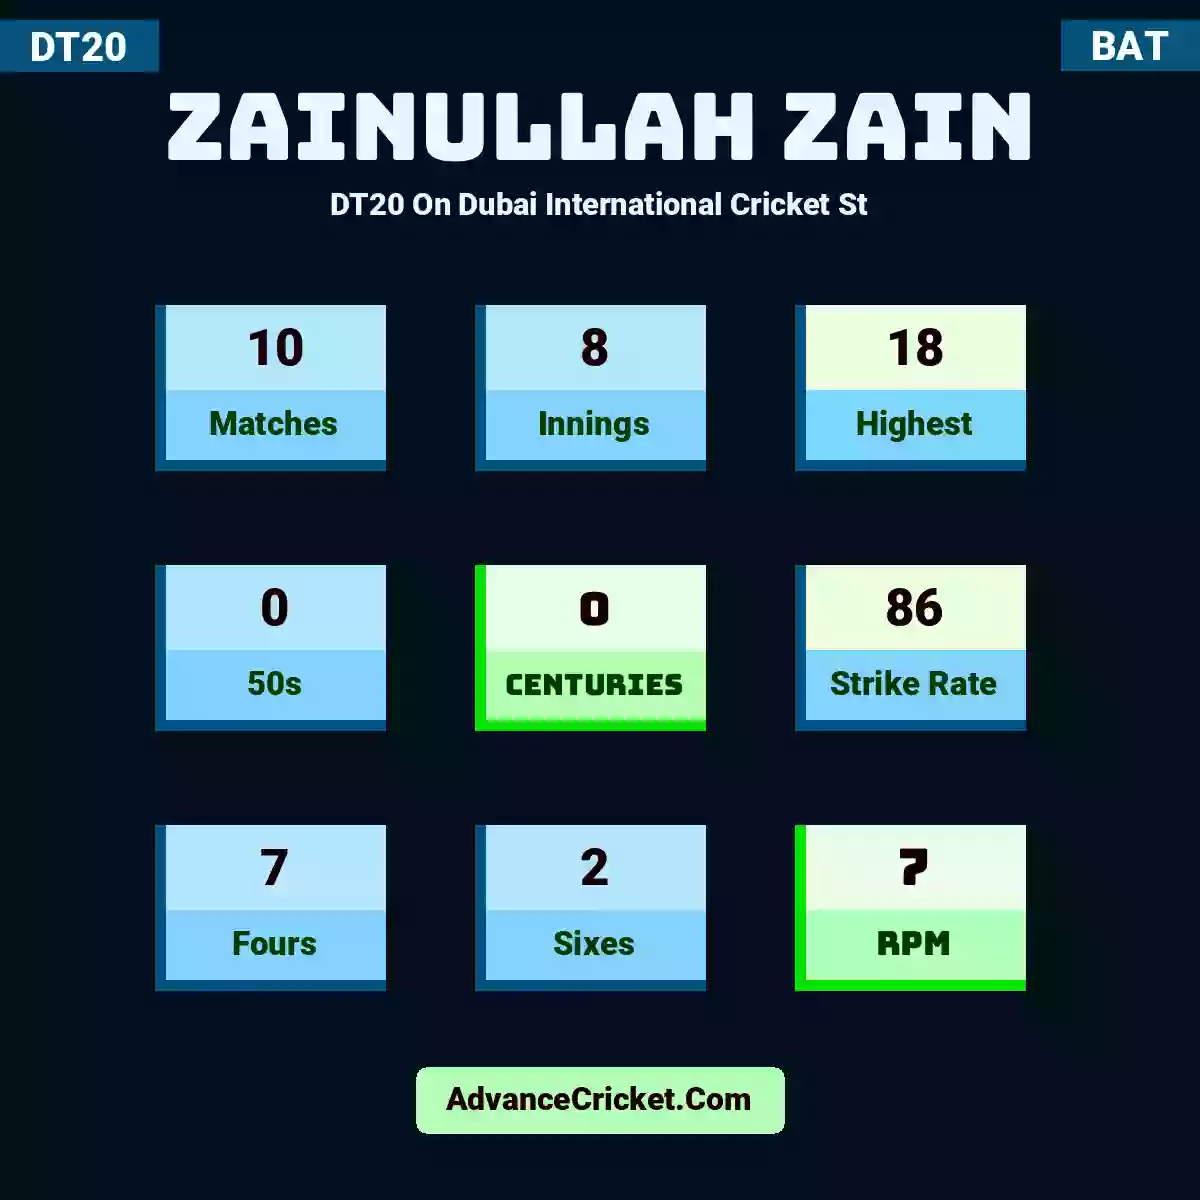 Zainullah Zain DT20  On Dubai International Cricket St, Zainullah Zain played 10 matches, scored 18 runs as highest, 0 half-centuries, and 0 centuries, with a strike rate of 86. Z.Zain hit 7 fours and 2 sixes, with an RPM of 7.